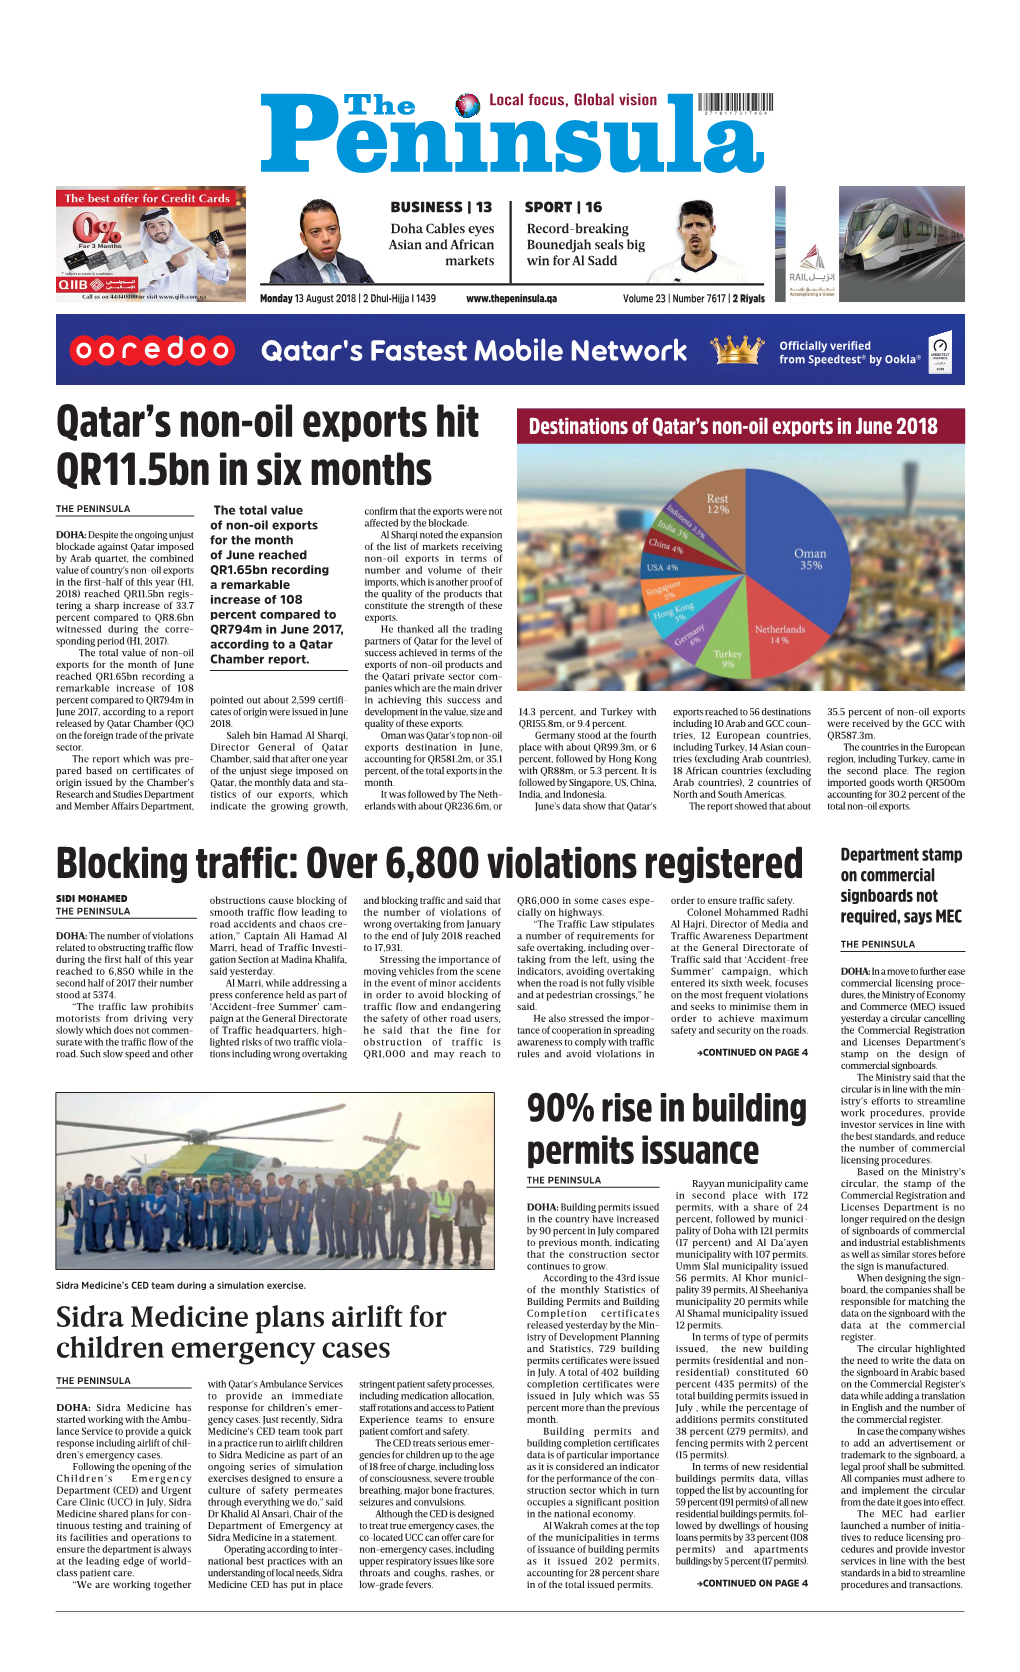 Qatar's Non-Oil Exports Hit QR11.5Bn in Six Months